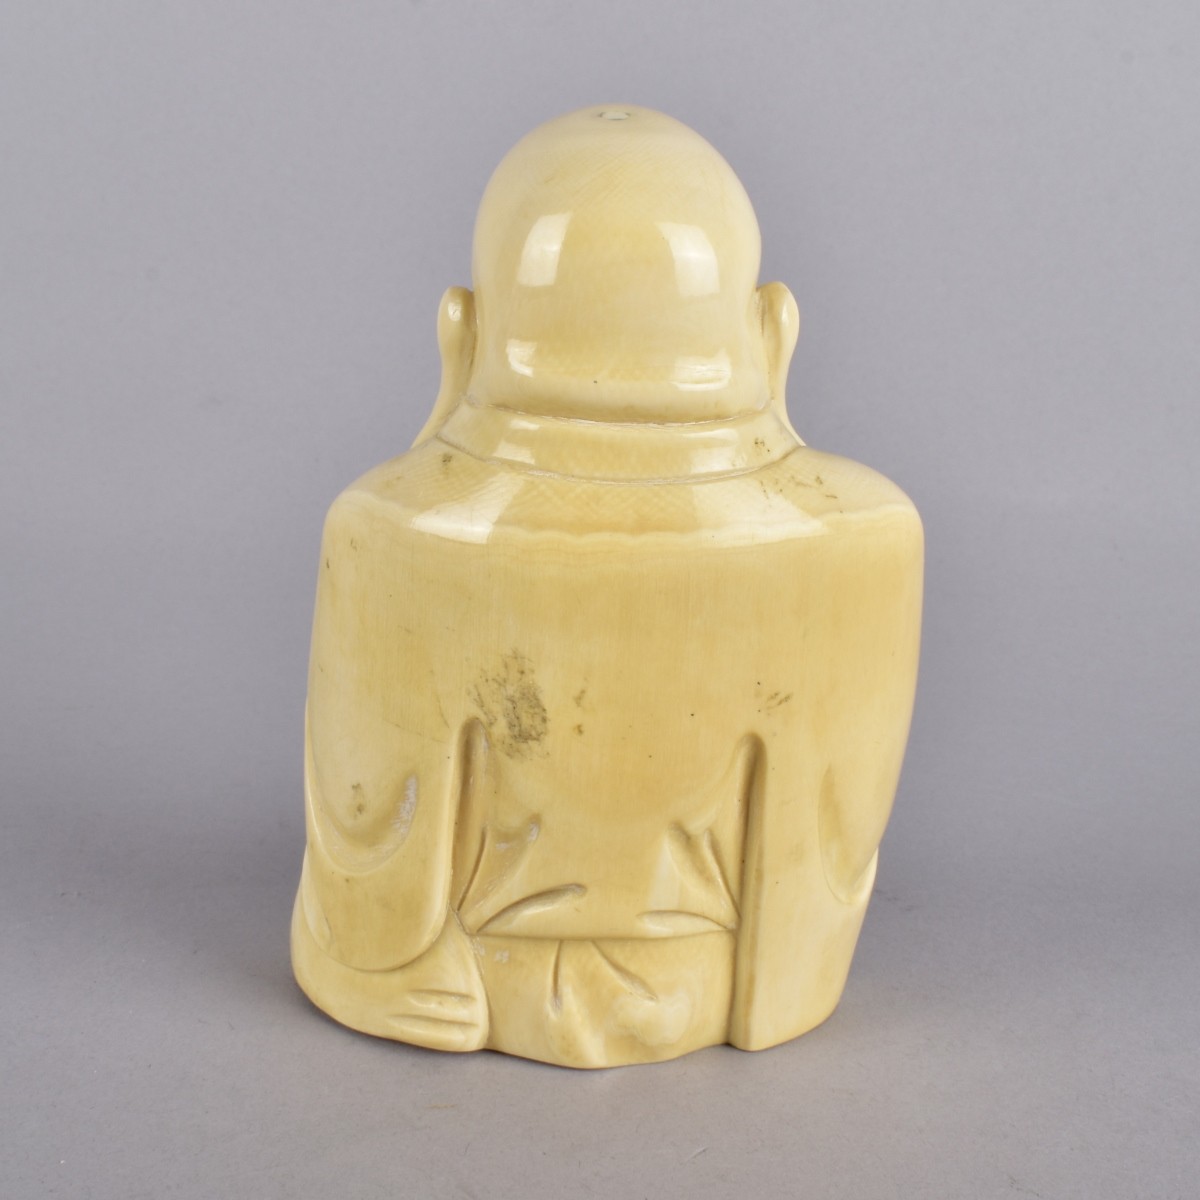 Antique Chinese Figurine